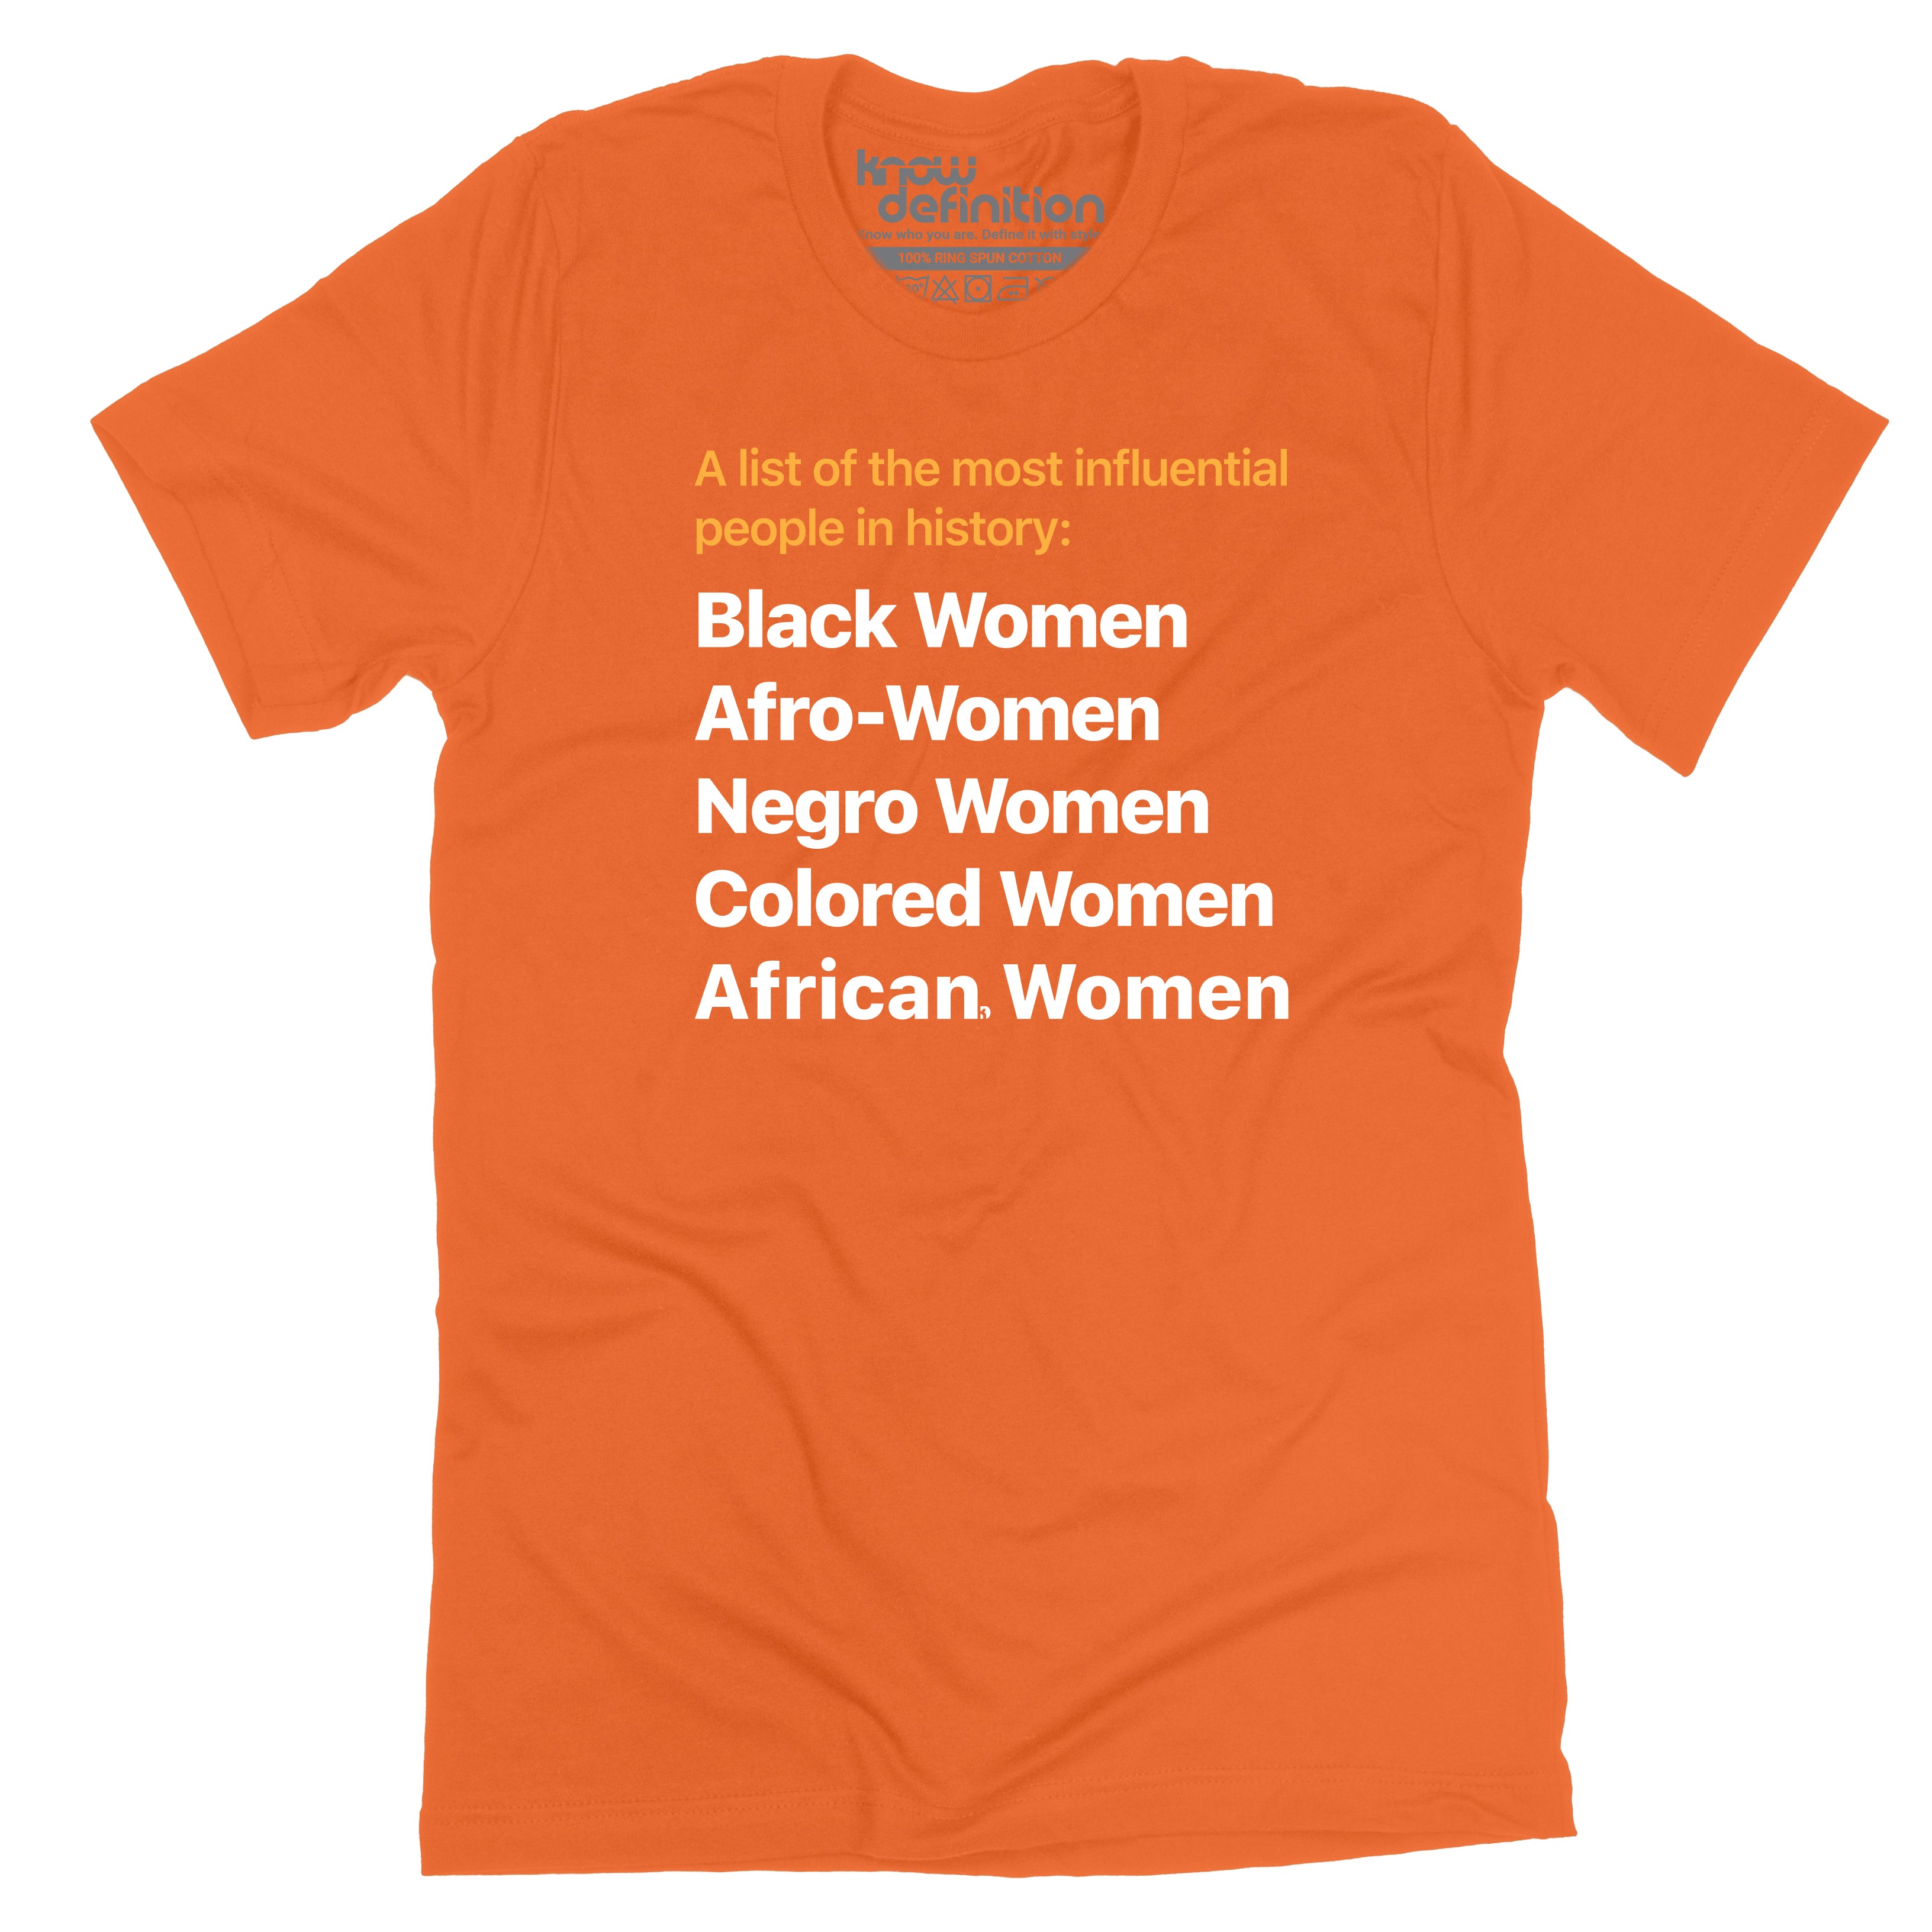 Logo Cotton T-shirt in Black - Women